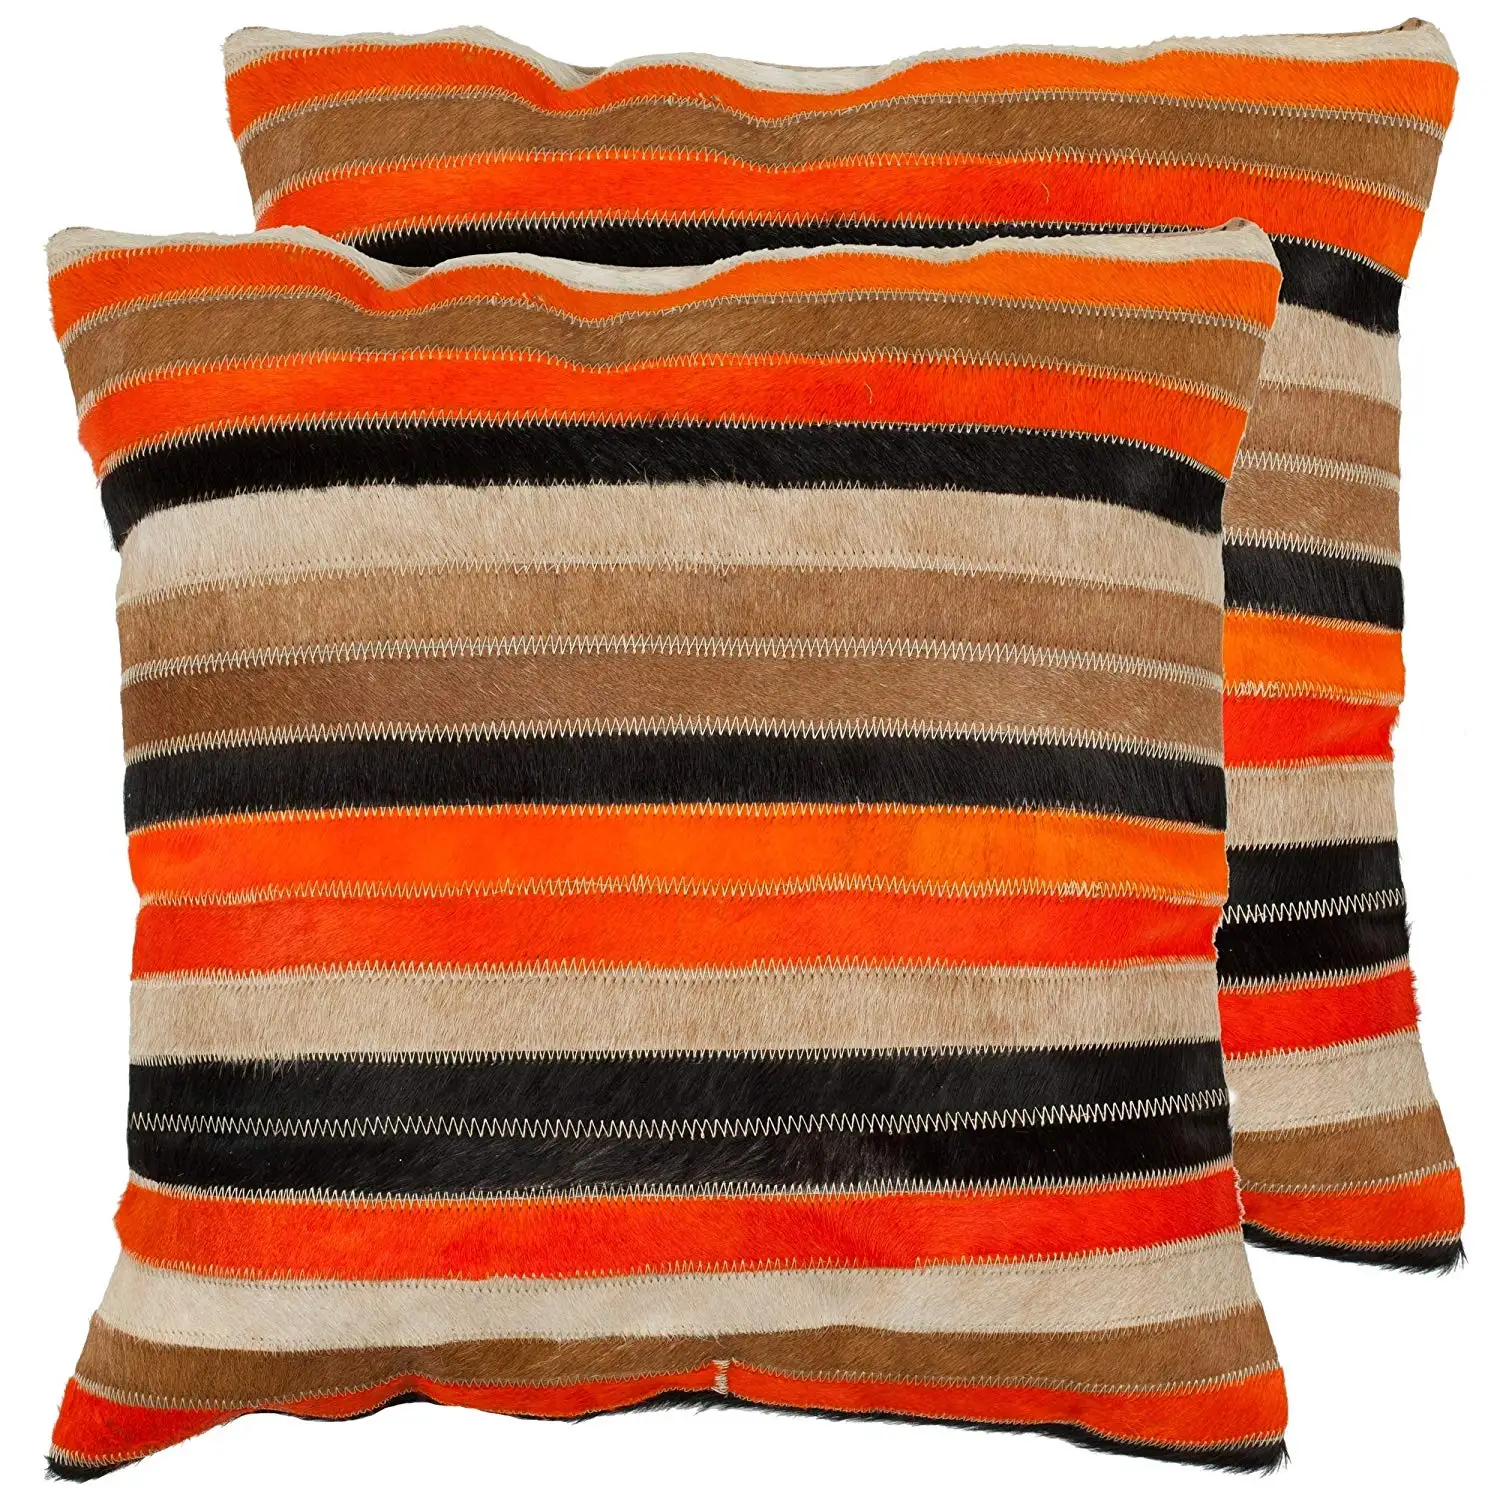 Buy 2015 New design colored Stripe decorative cushion covers,linen ...